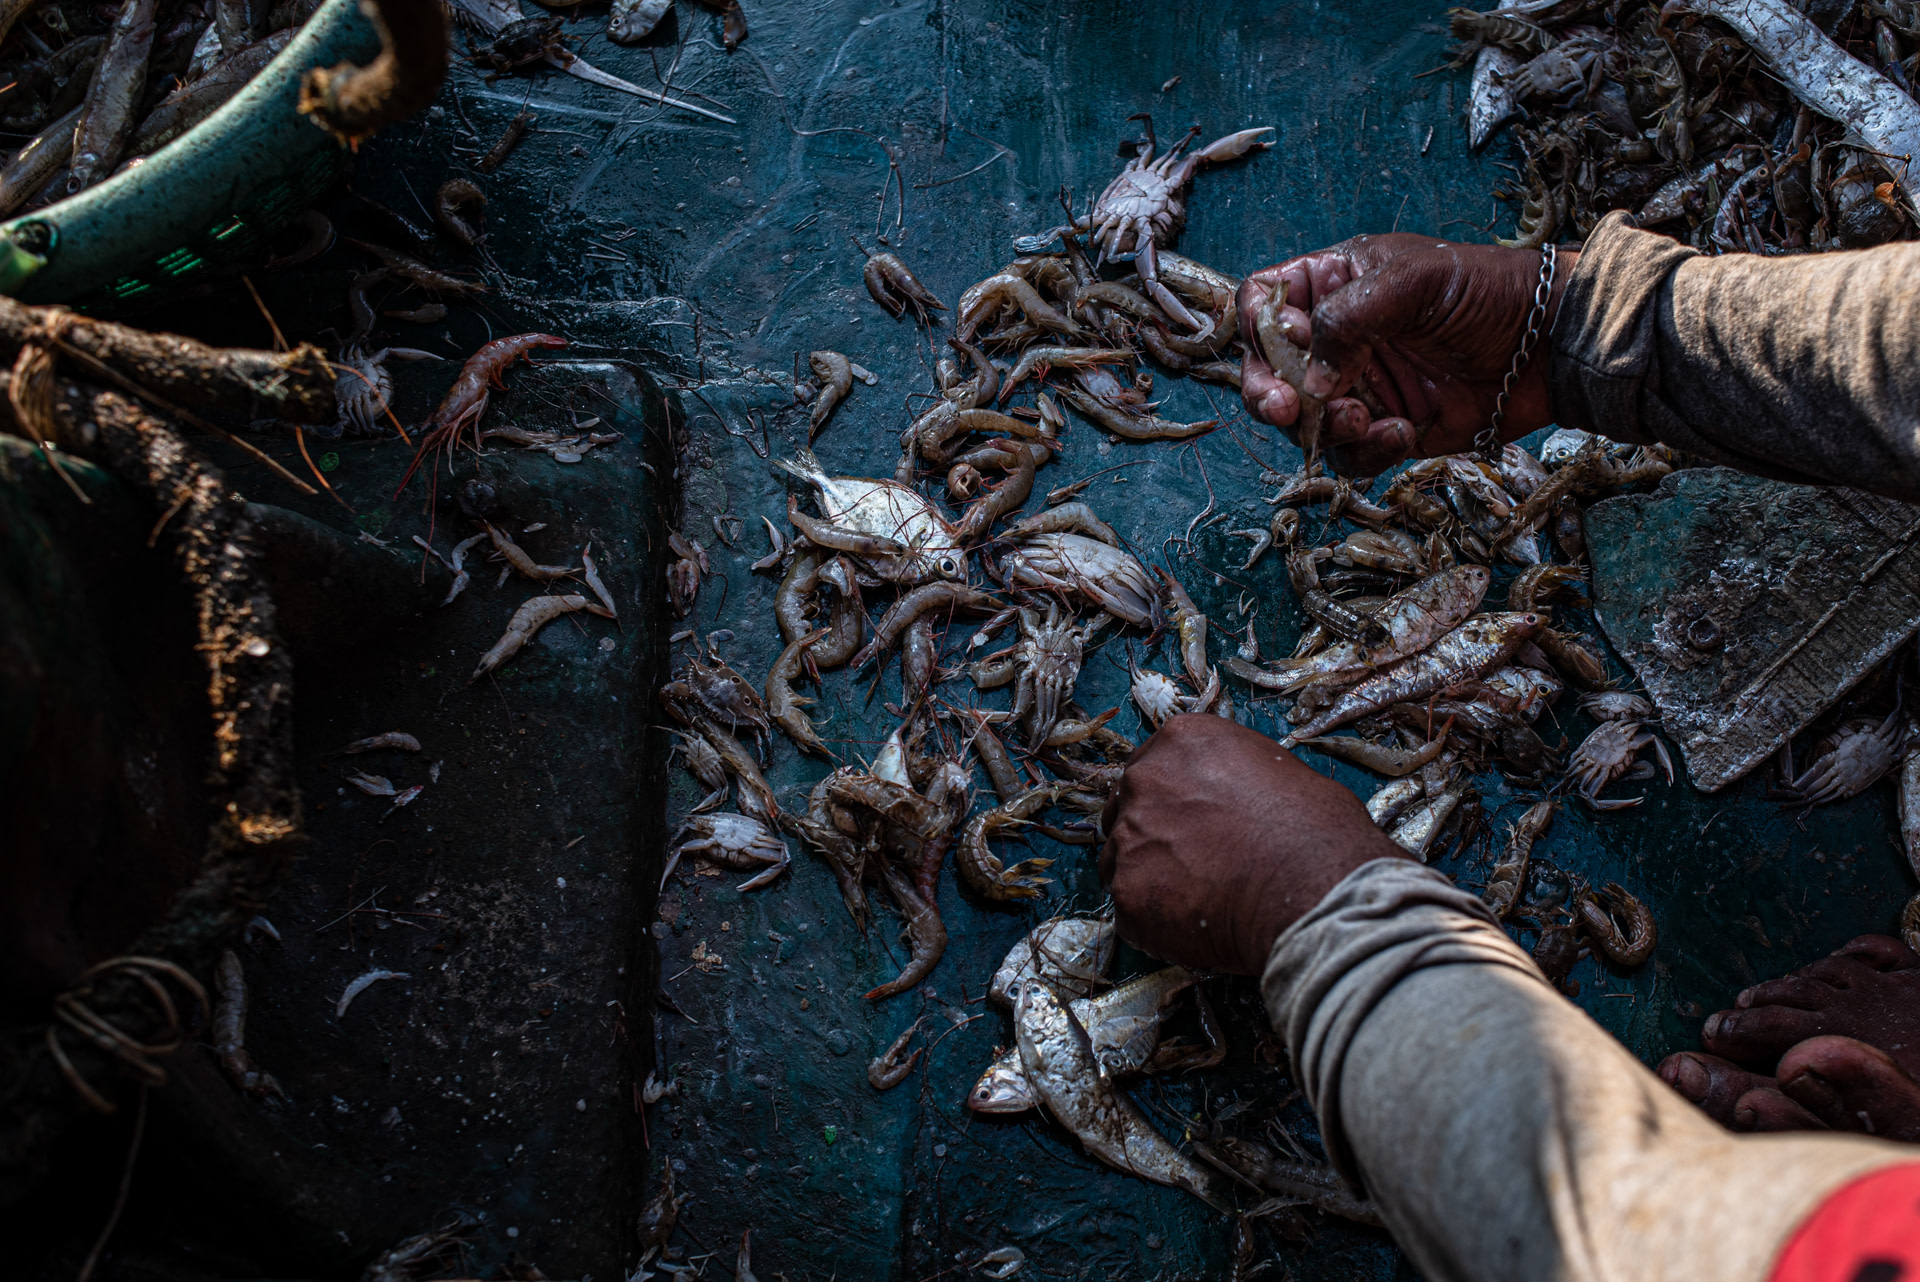 A fisherman separates shrimps and prawns from the bycatch on his trawler. Kakinada Harbour, Kakinada, Andhra Pradesh, India, 2022. S. Chakrabarti / We Animals Media